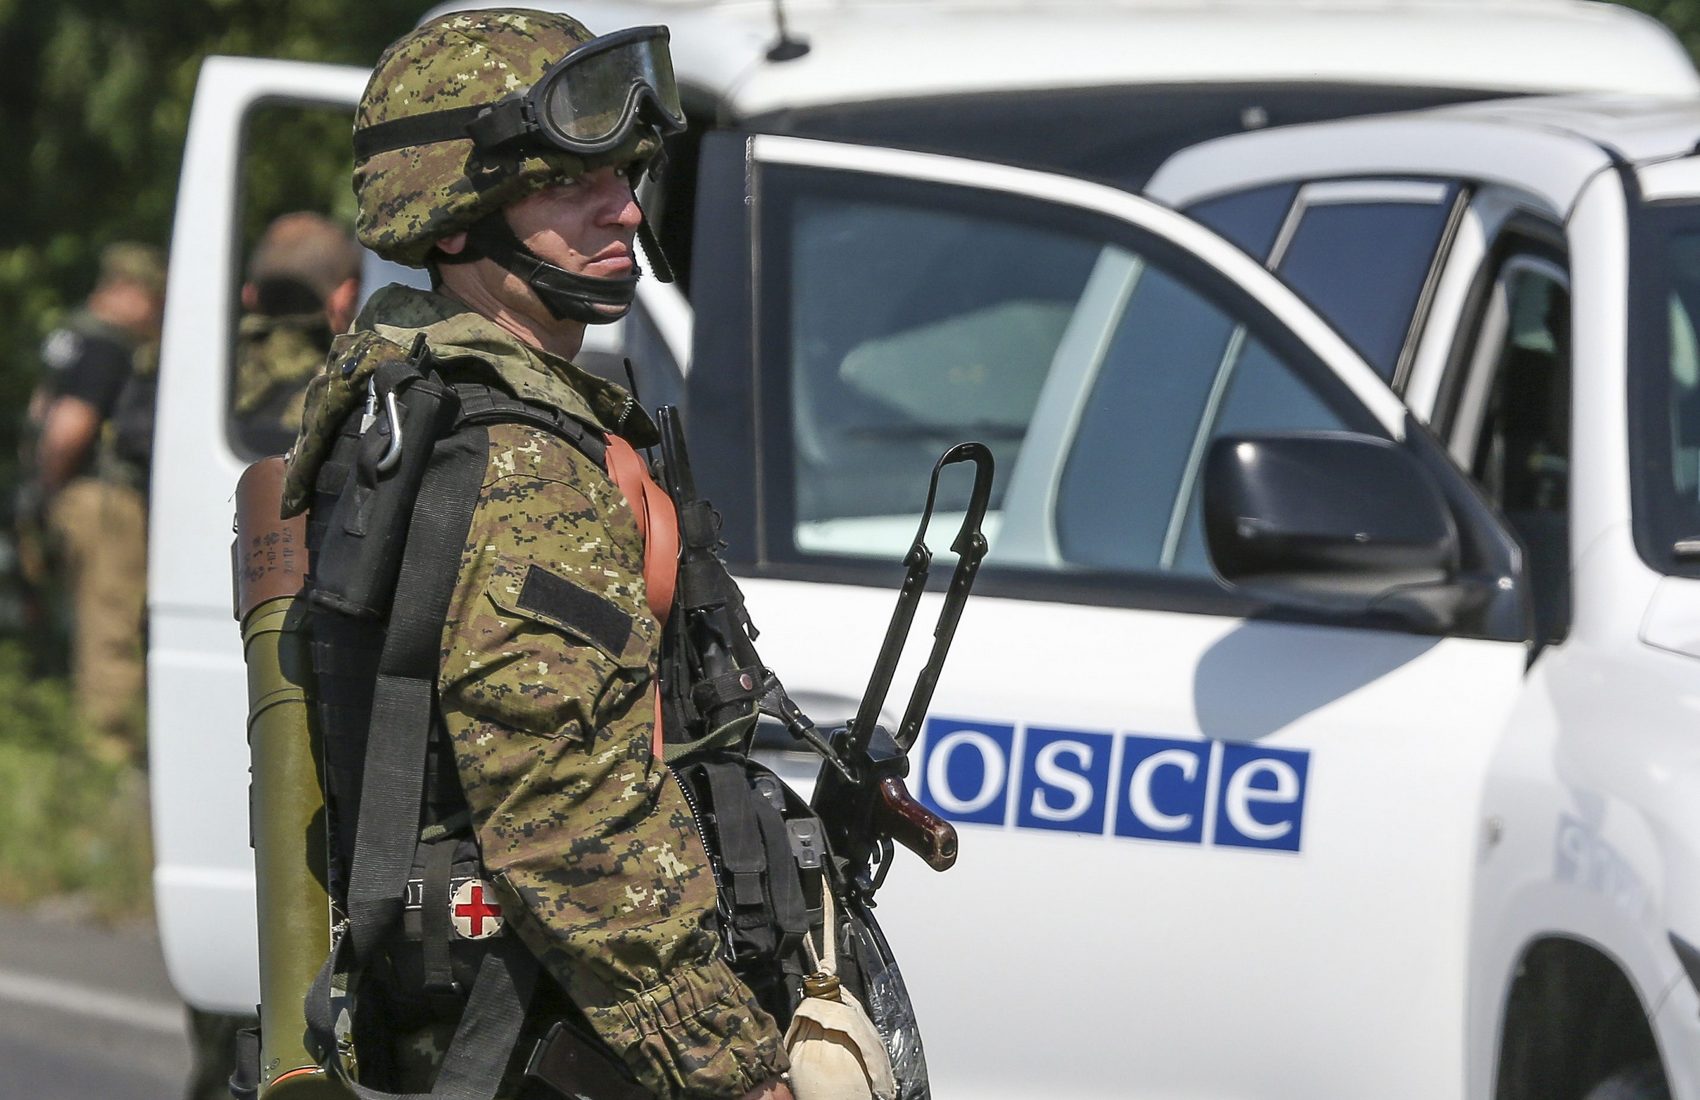 ОБСЕ из-за коронавируса обновит правила патрулирования на Донбассе